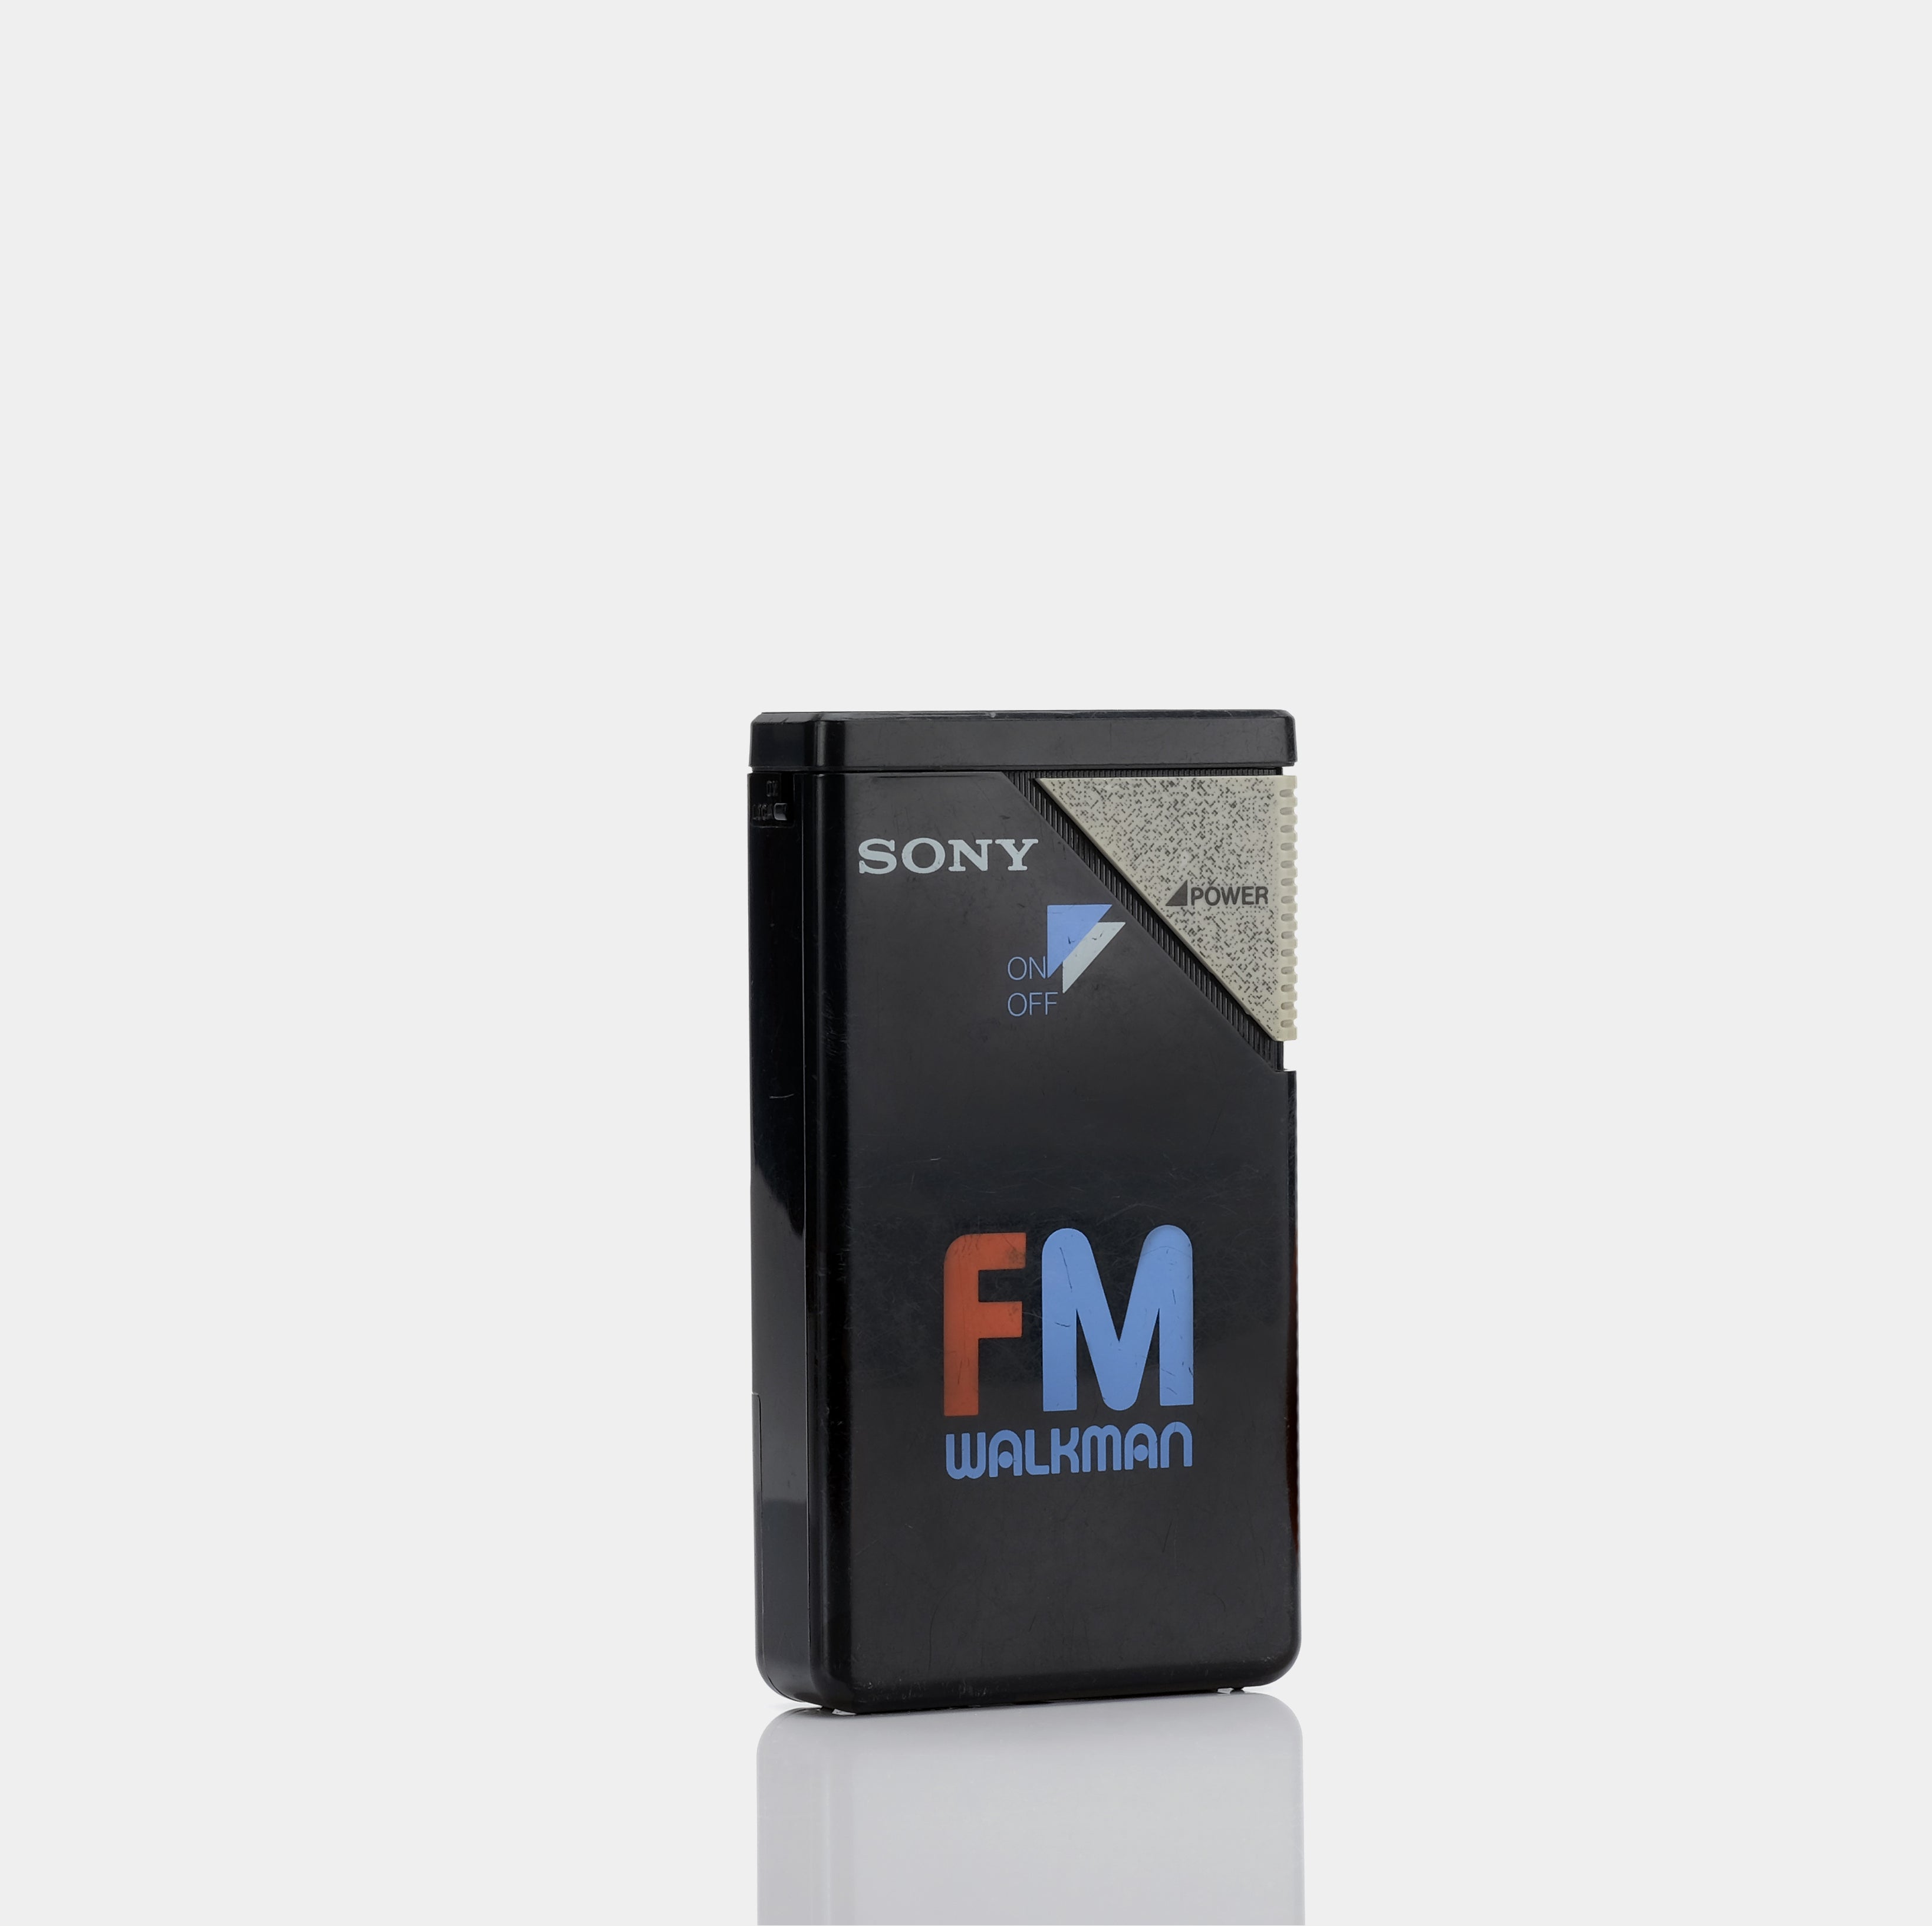 Sony Walkman SRF-16W FM Portable Radio